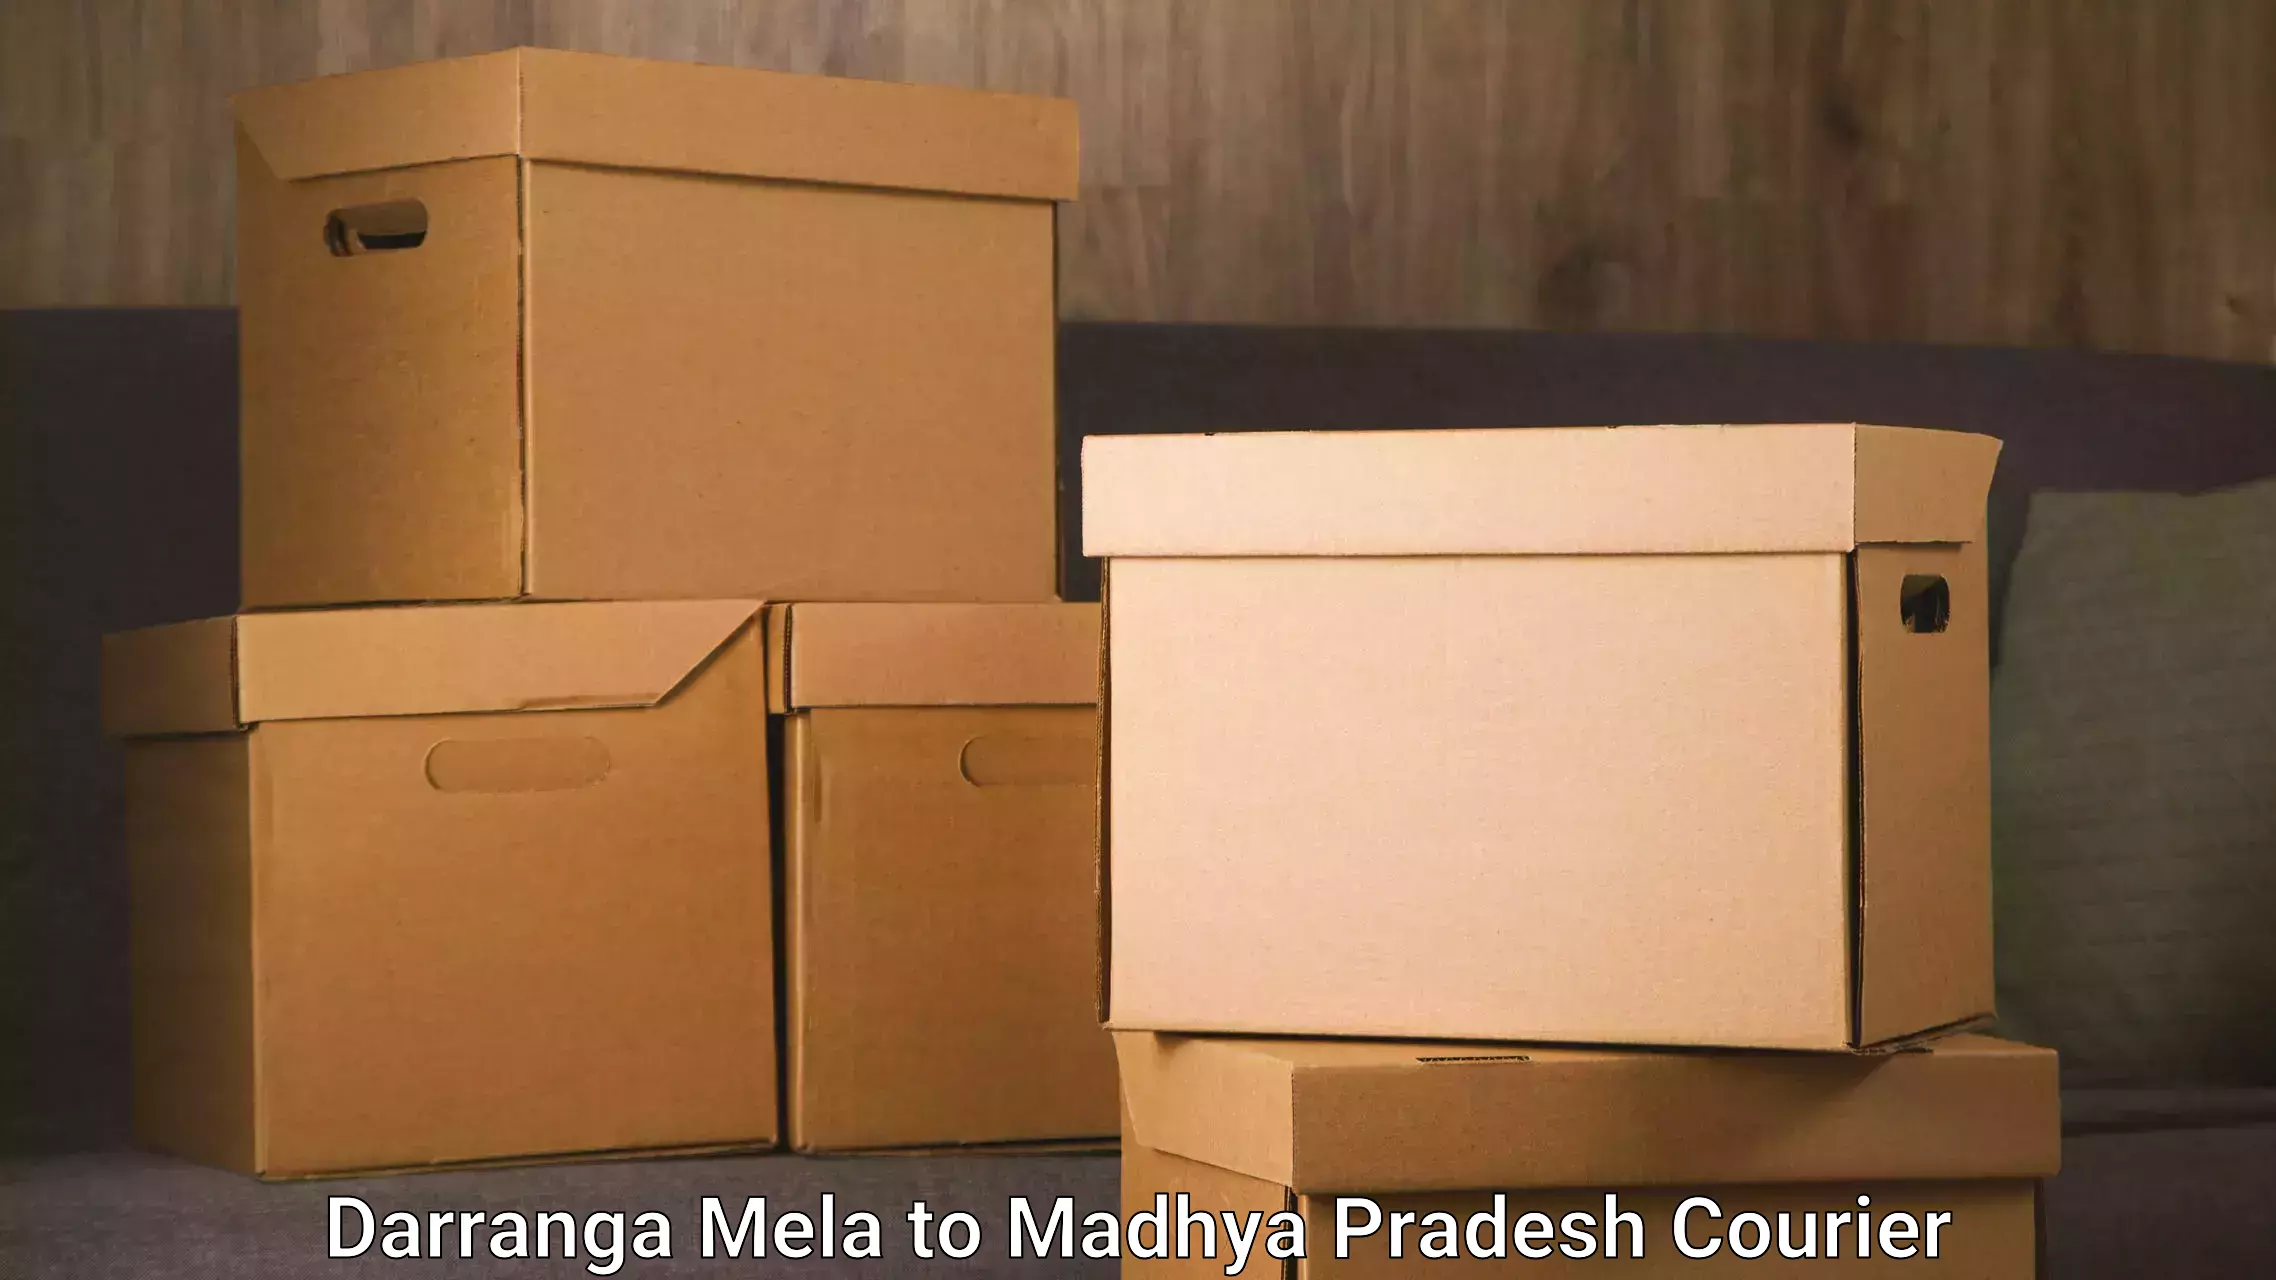 Express delivery network Darranga Mela to Madhya Pradesh